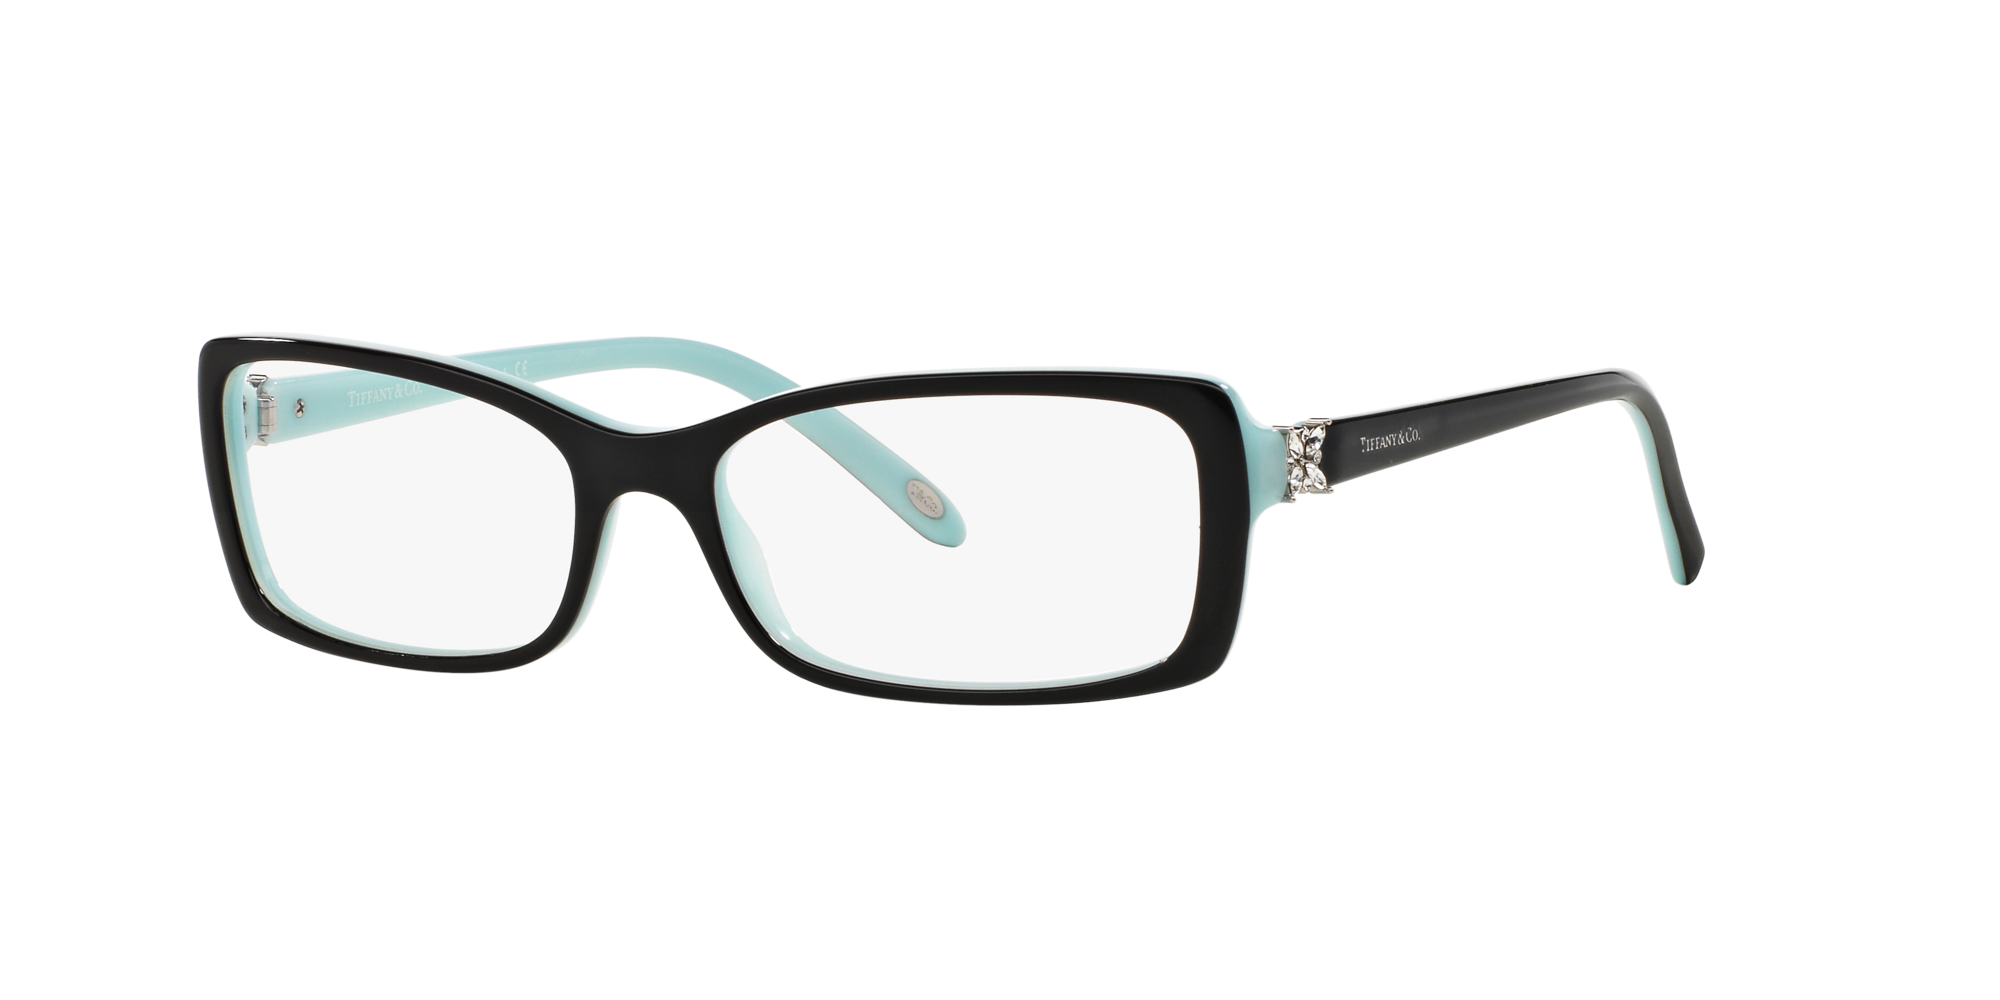 tiffany glasses frames 2019